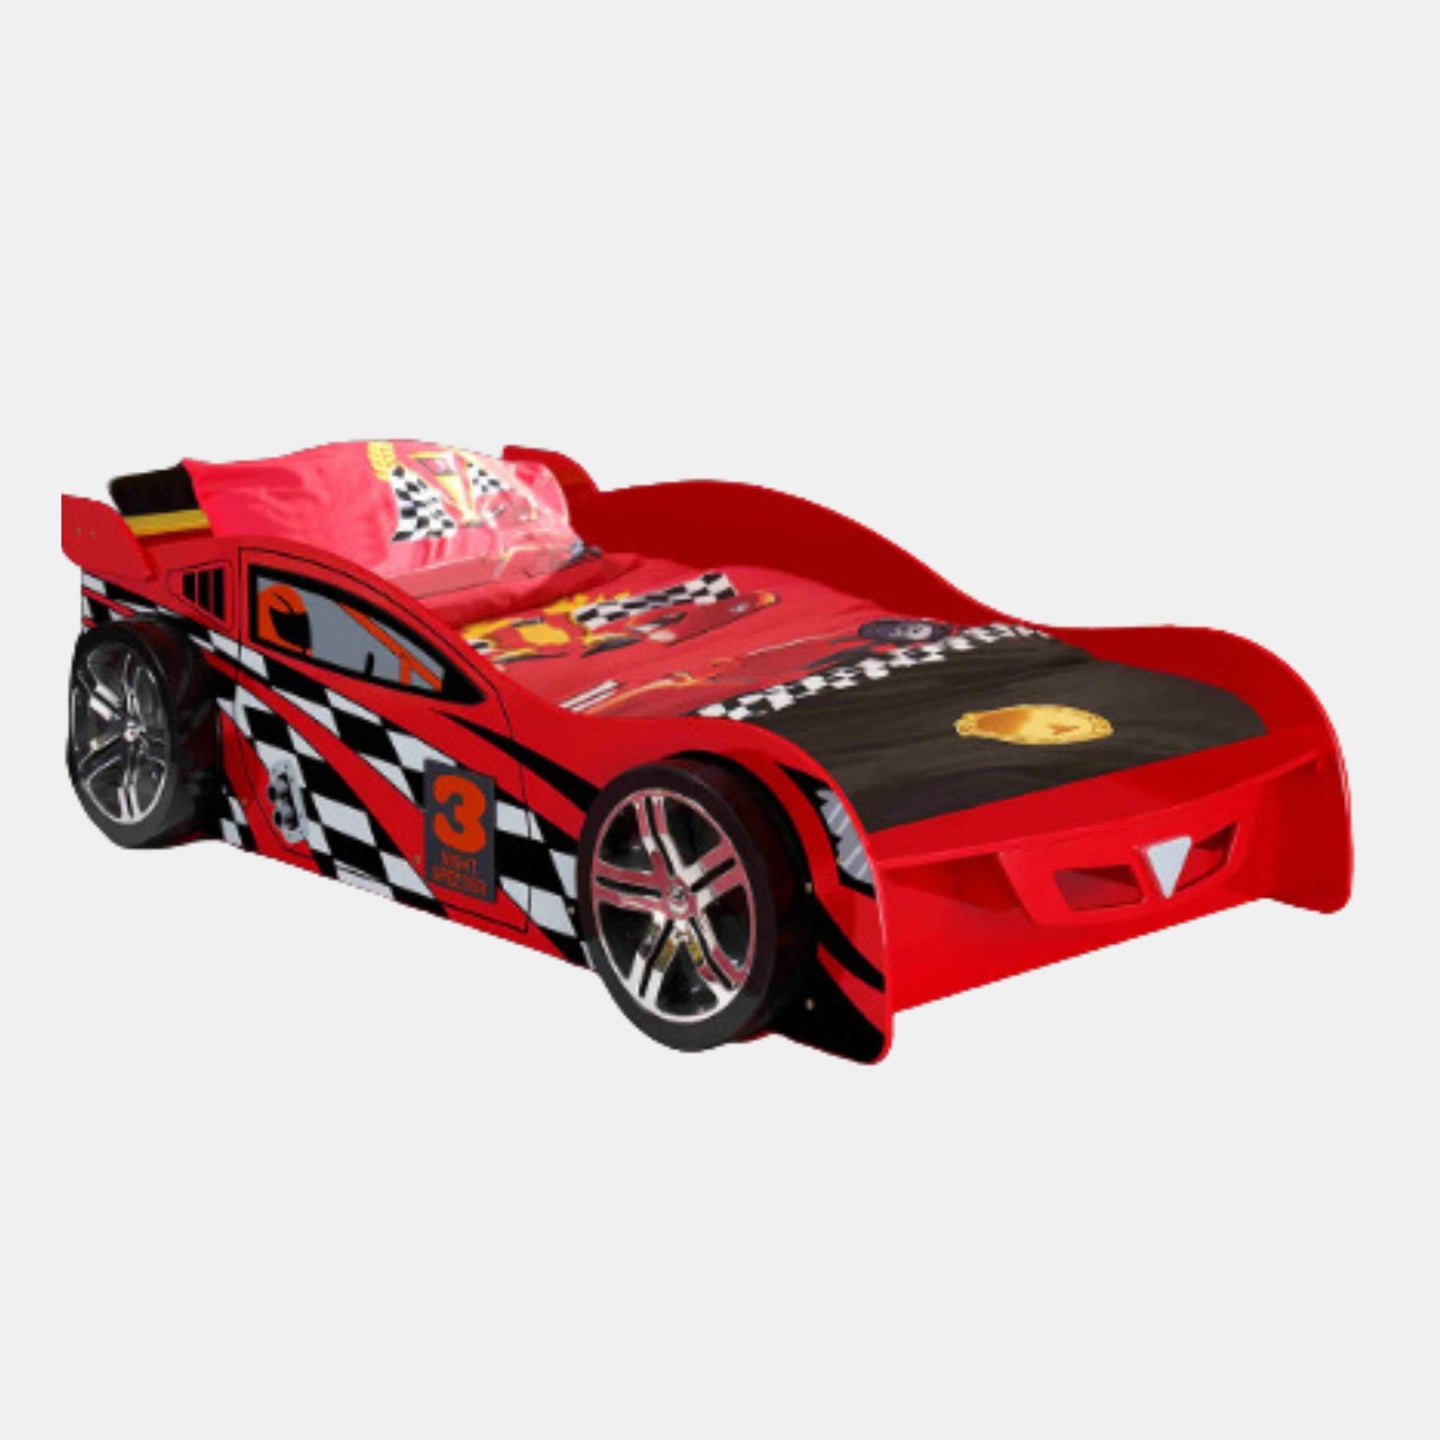 King Single speed need racing car bed